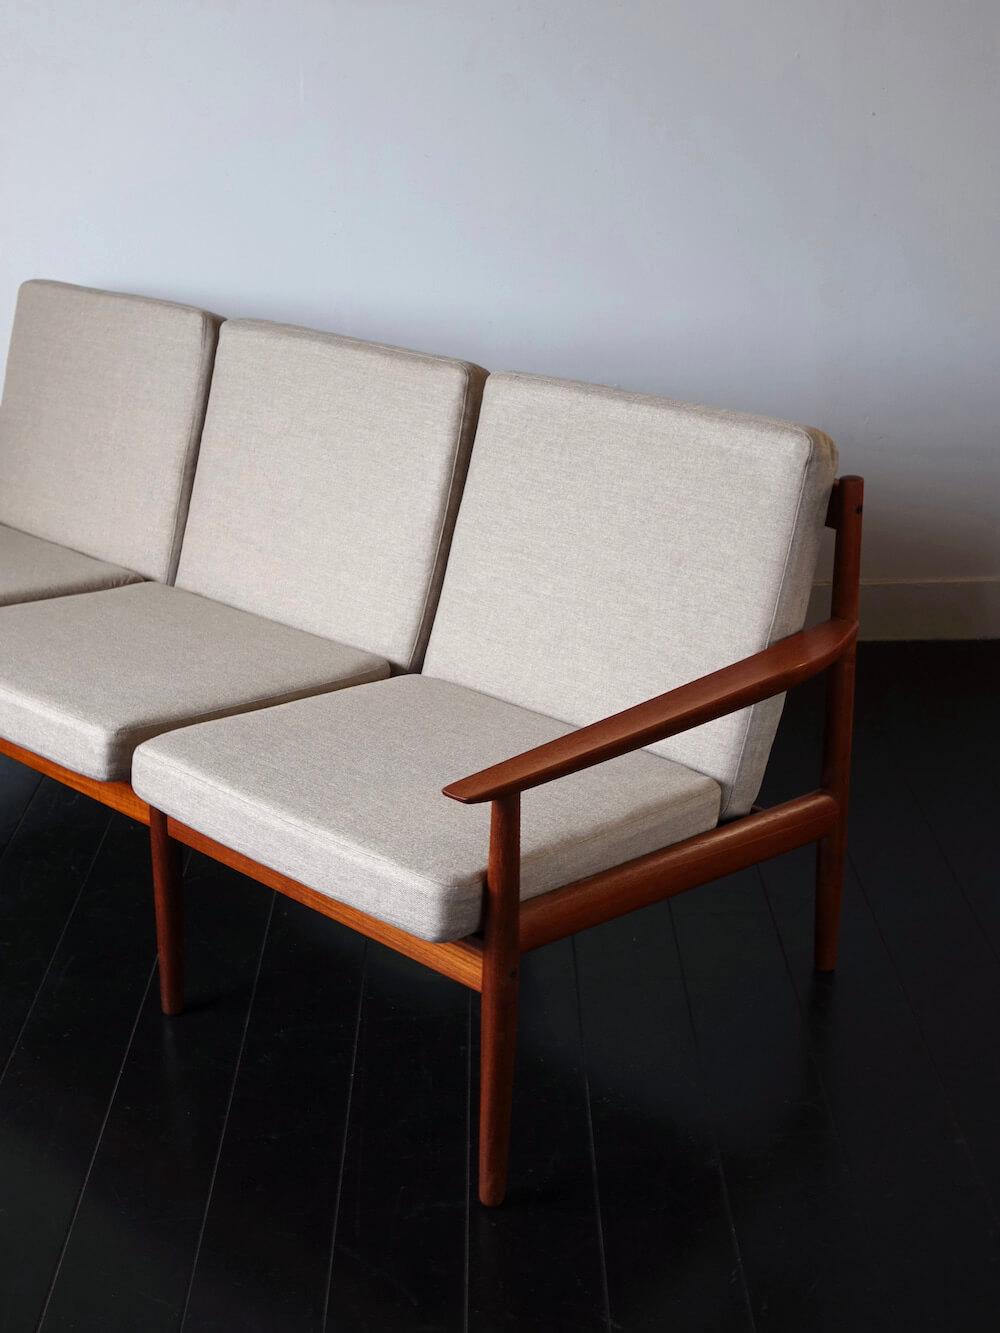 Sofa by Arne Vodder for Glostrup Mobelfabrik